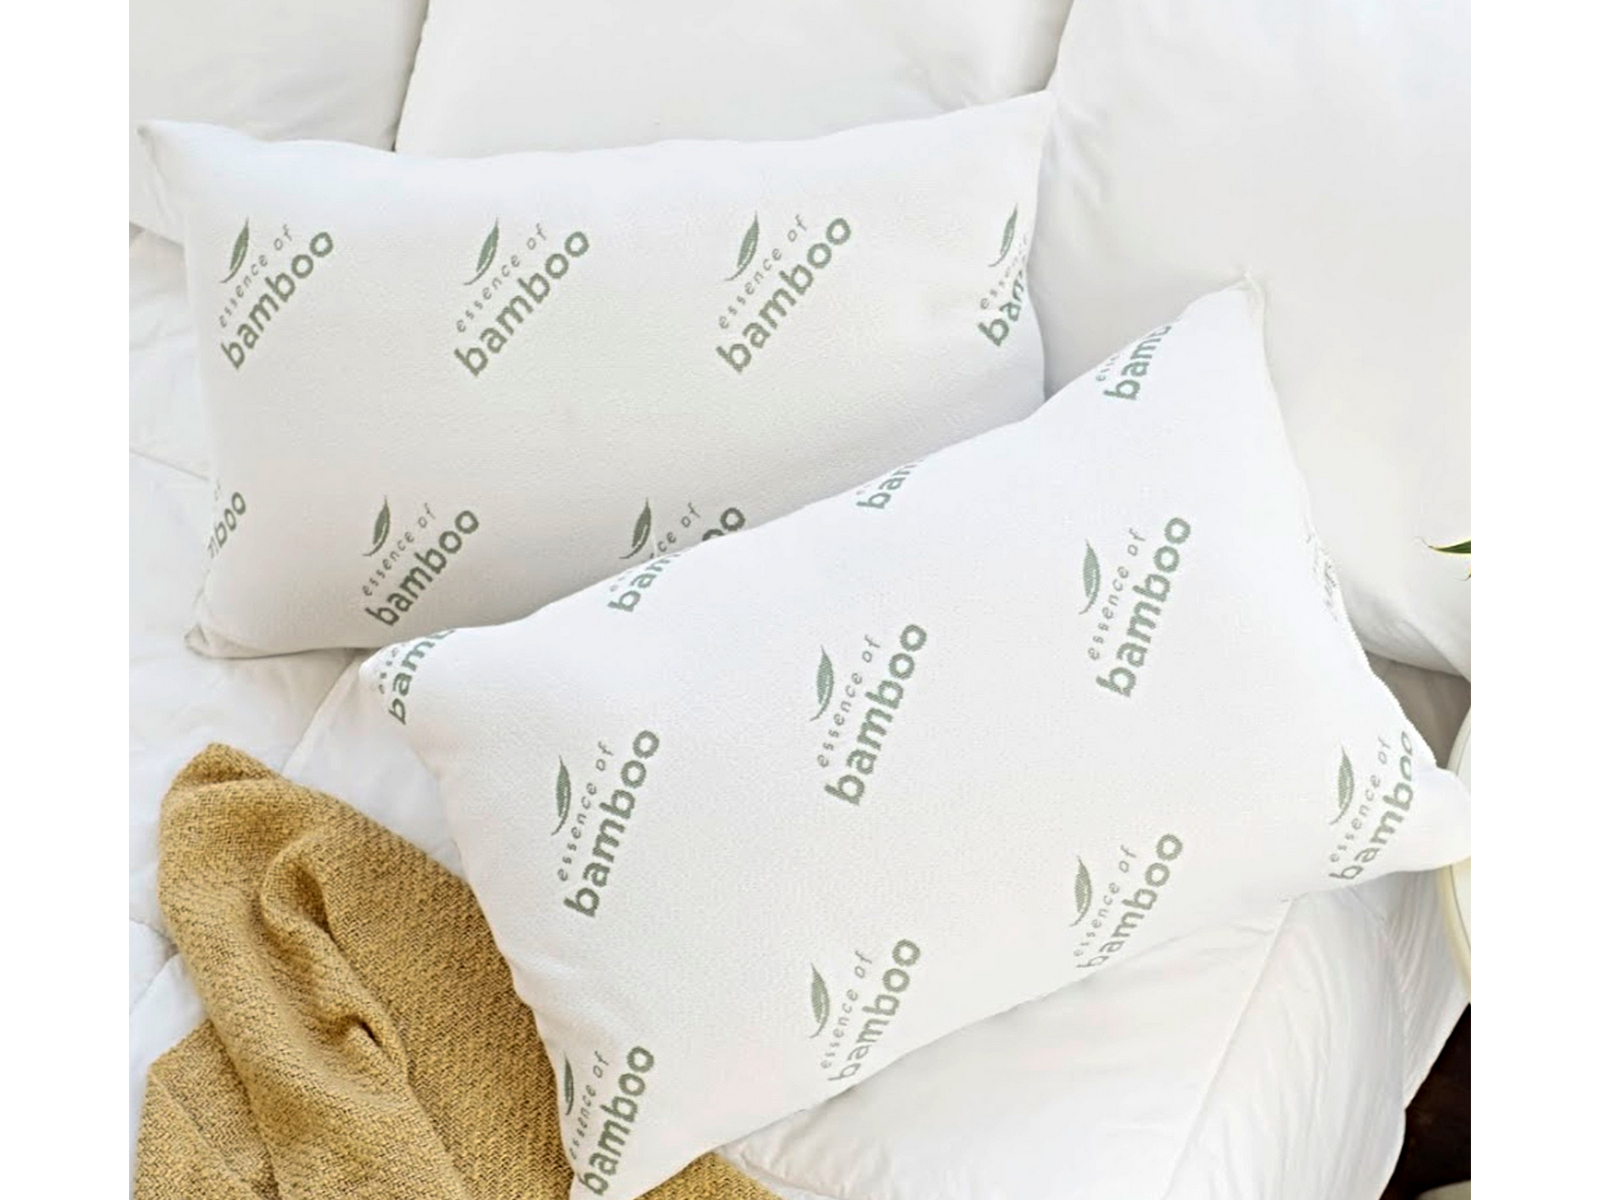 Simmons Standard/Queen Essence of Bamboo Pillows - 2 Pack